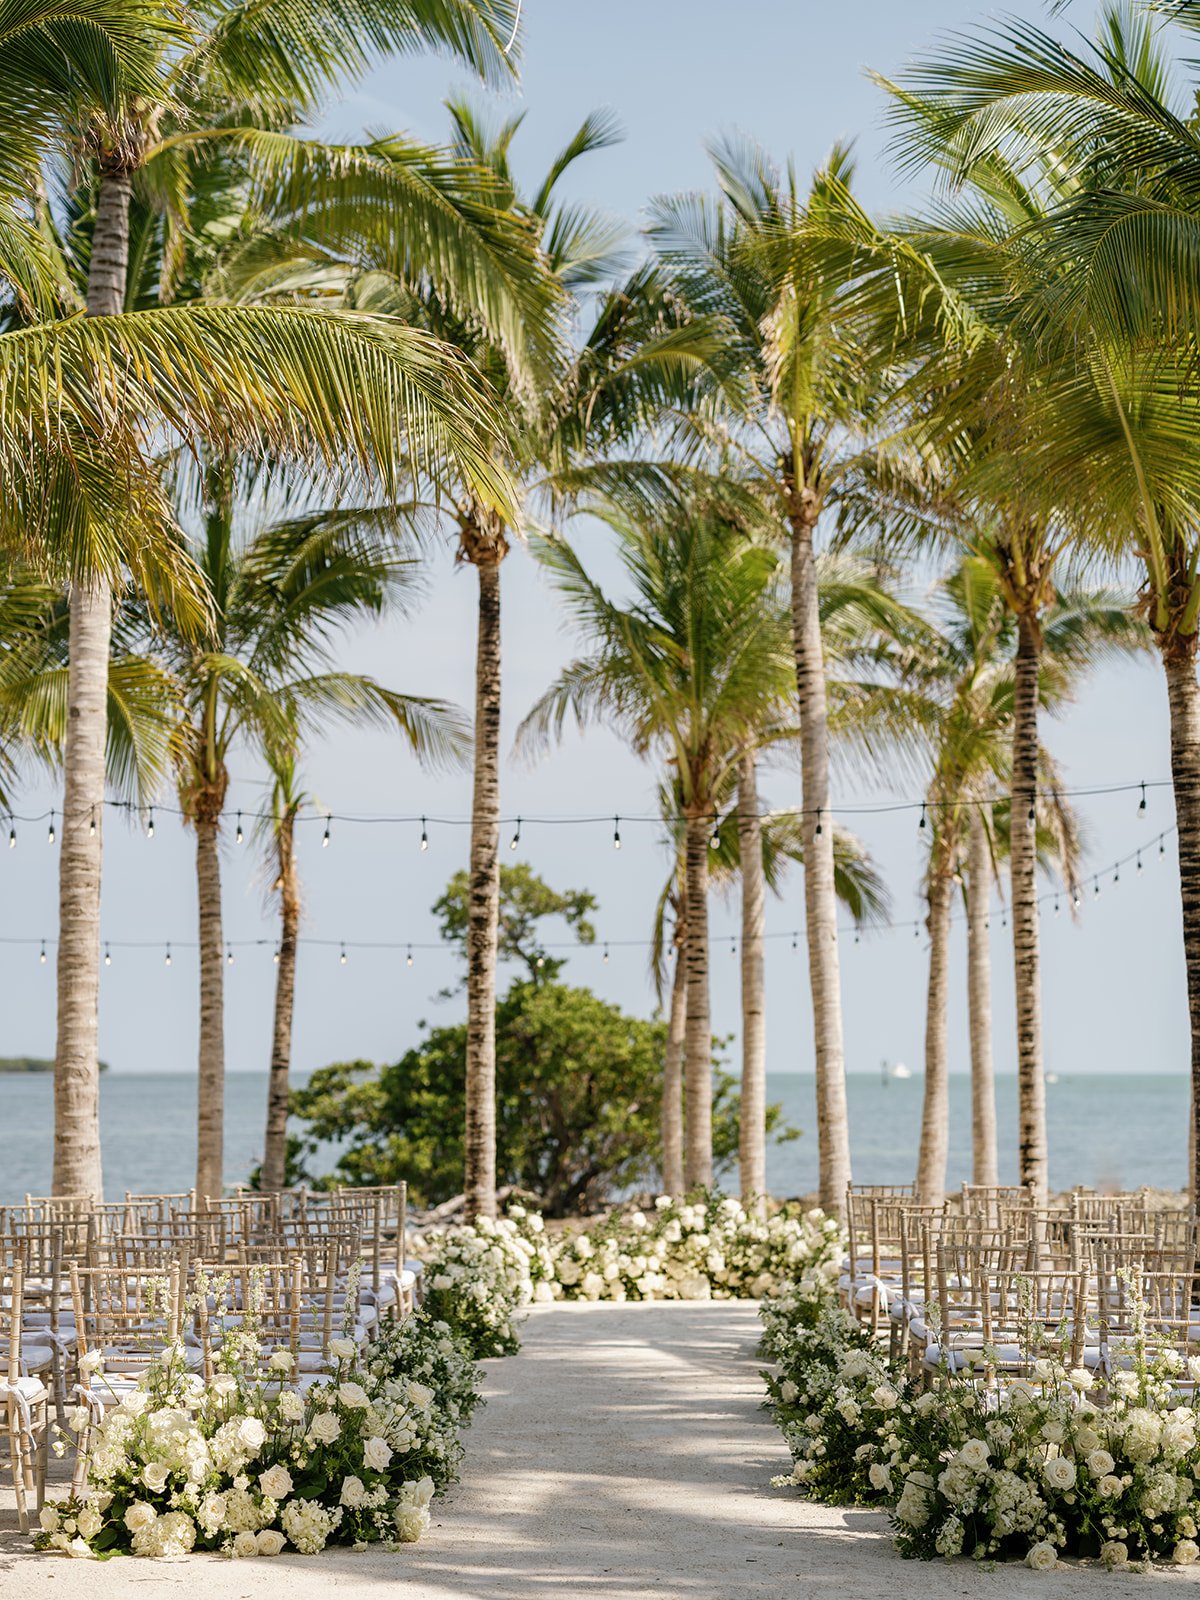 9 ISLA BELLA BEACH RESORT - LUZXURY WEDDING PLANNER - KEY WEST WEDDING PLANNER - ISLAMORADA WEDDING - FLORIDA KEYS WEDDING PLANNER - DESTINATION WEDDING - THE KNOT  - GREEN WEDDING SHOES.jpg